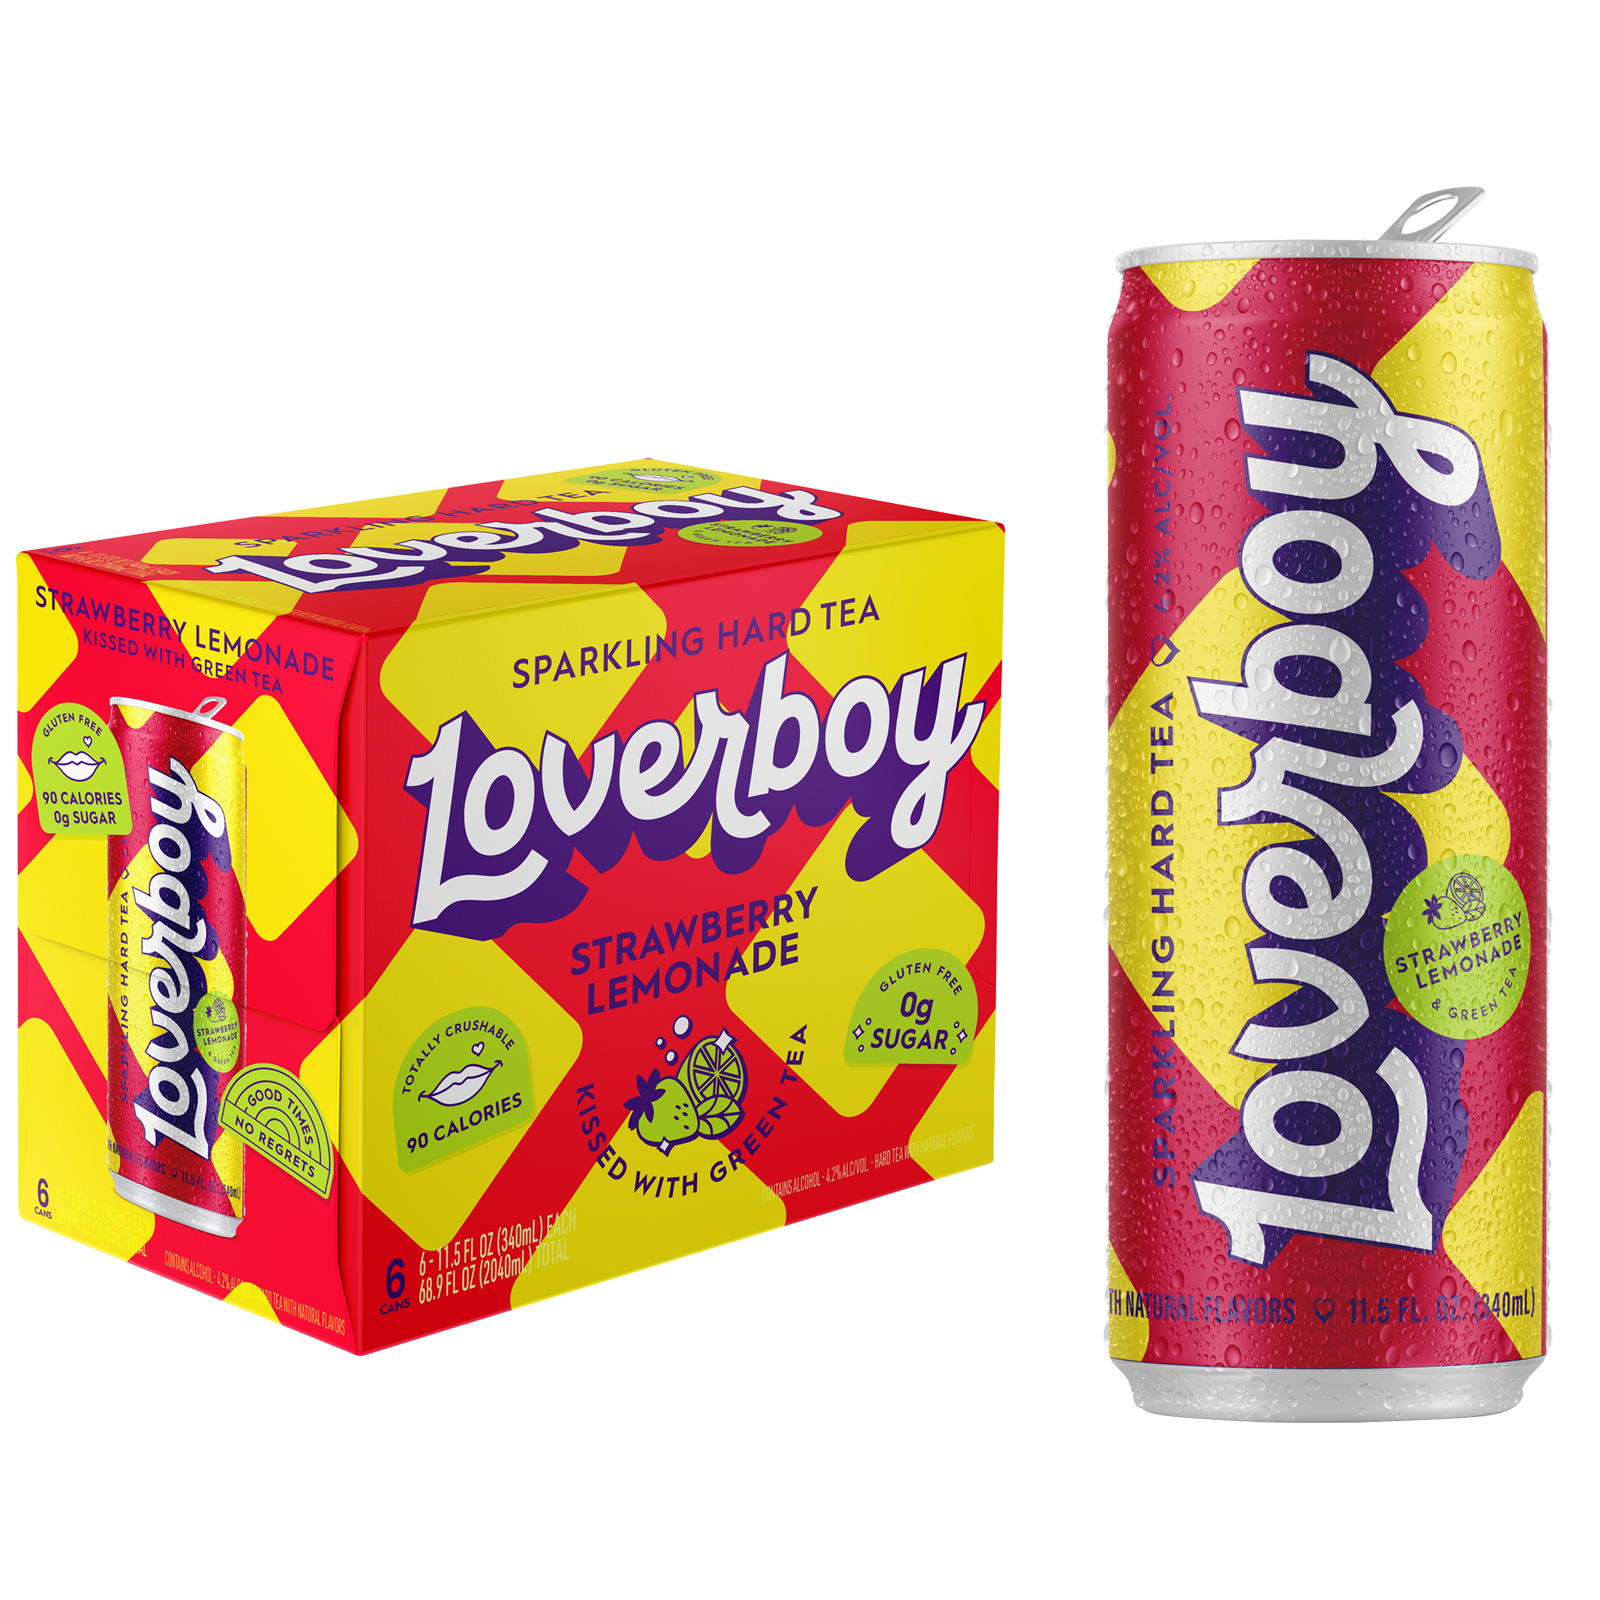 Loverboy Strawberry Lemonade Sparkling Hard Tea 6pk 12oz Can 4.2% ABV